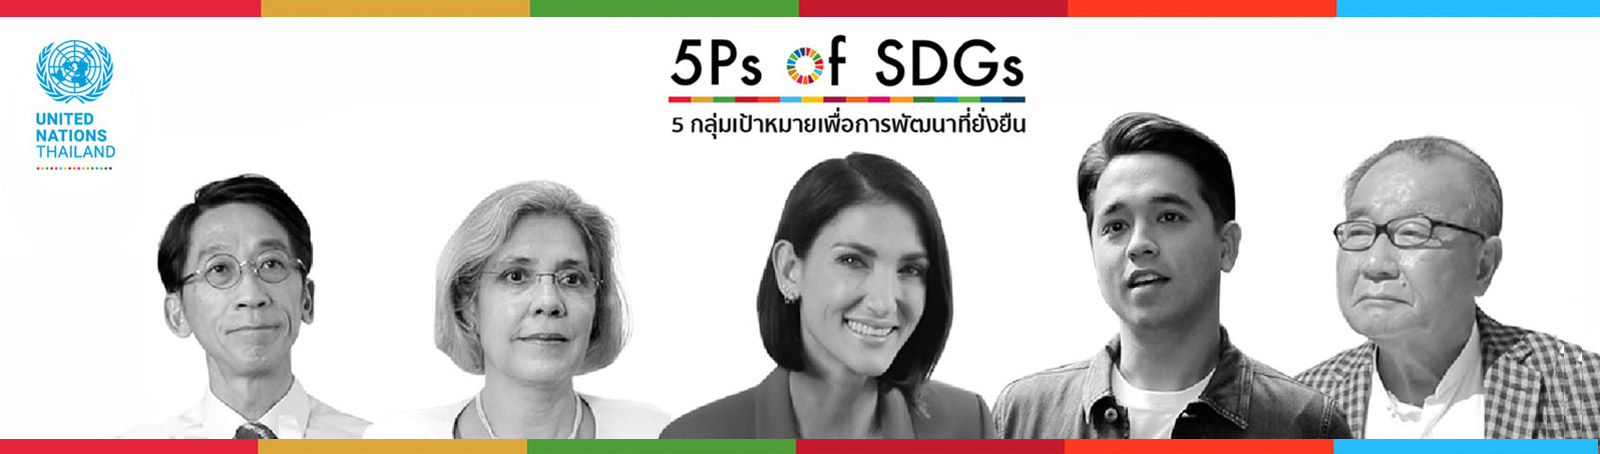 UN in Thailand launches Sustainable Development Goals (SDG) online campaign 